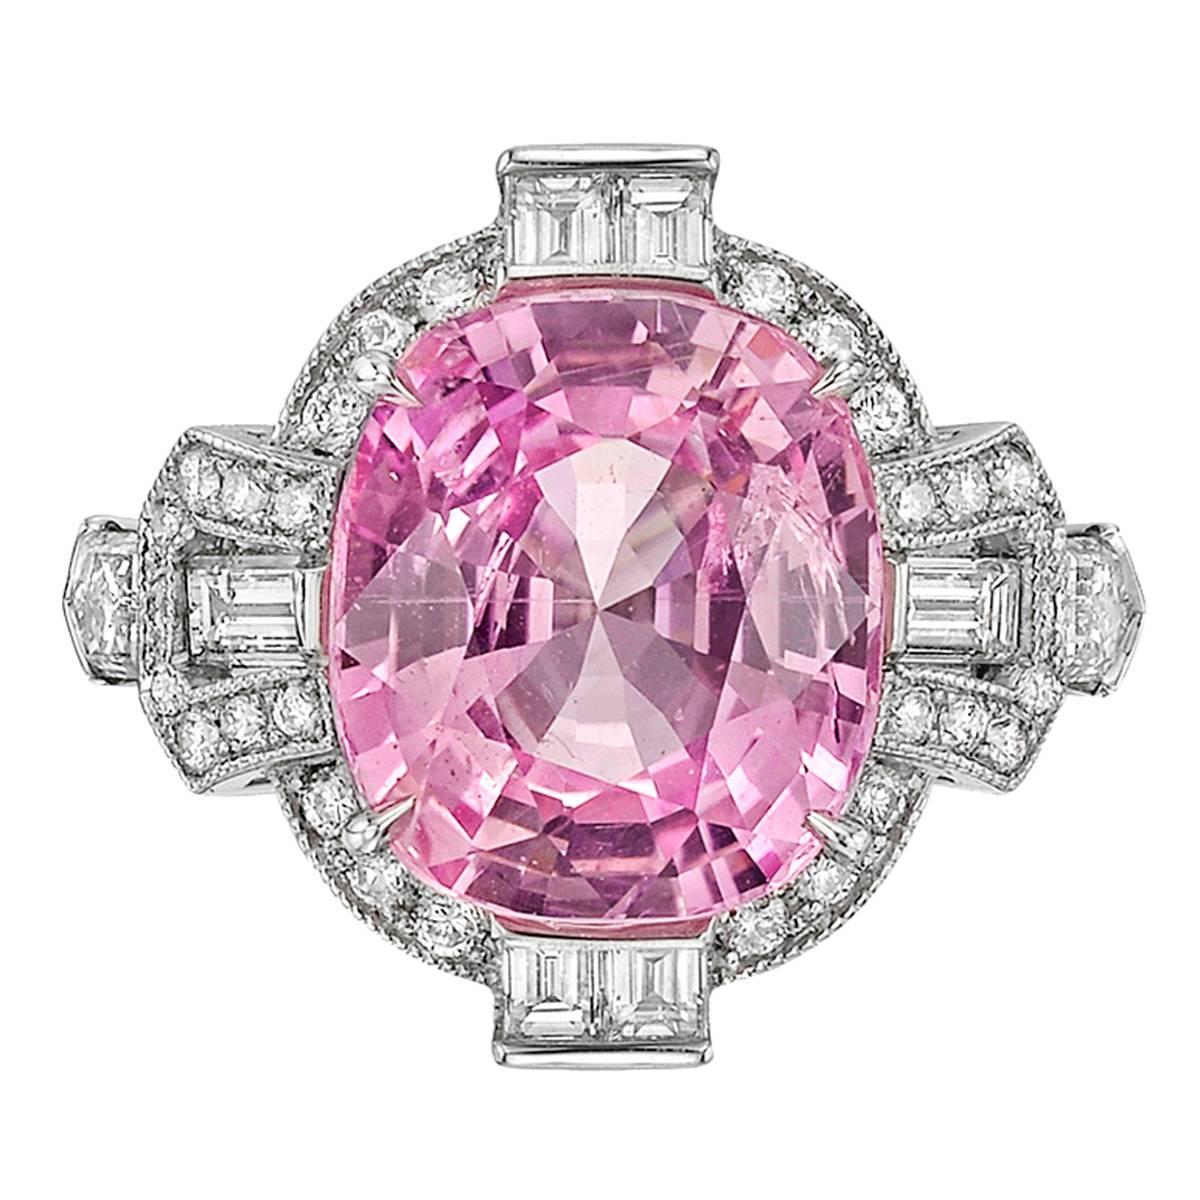 Raymond C. Yard 6.22 Carat Pink Sapphire Diamond Platinum Ring